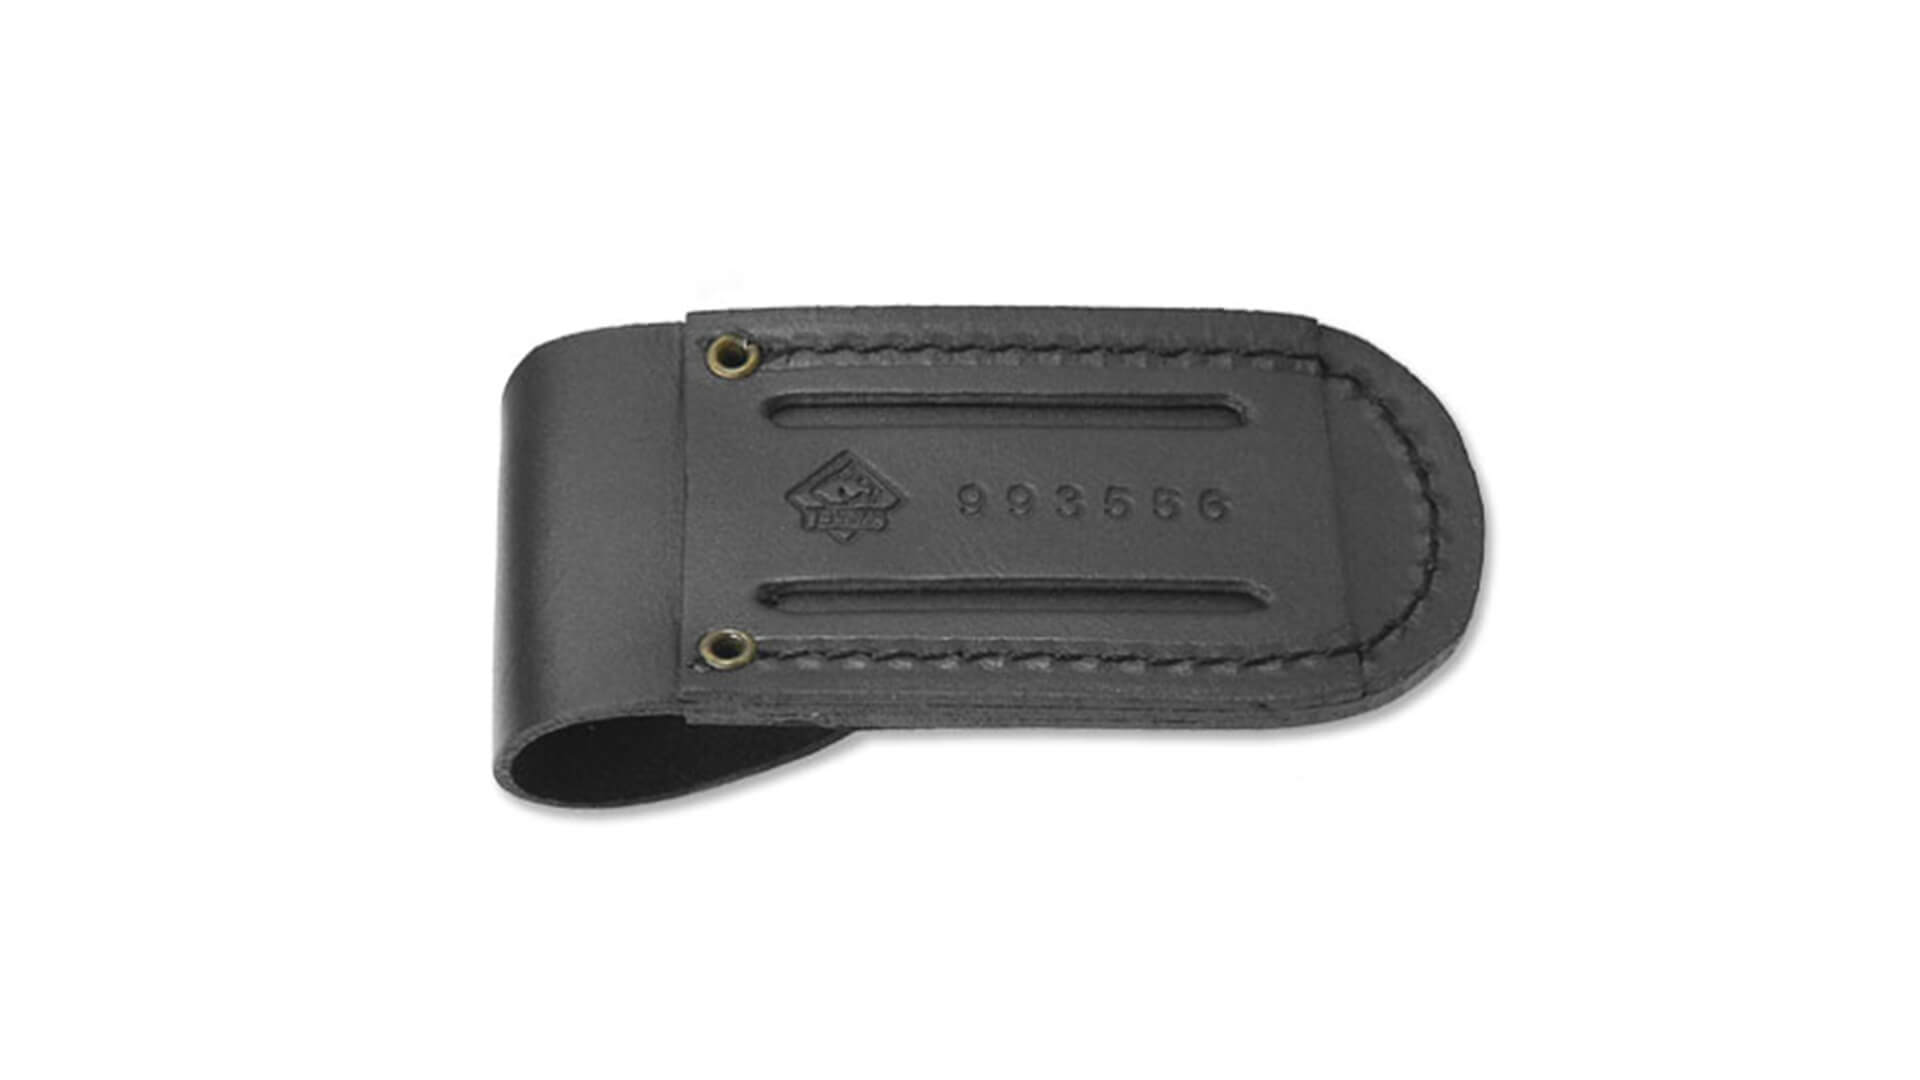 puma-belt-case-black-back-view-993556